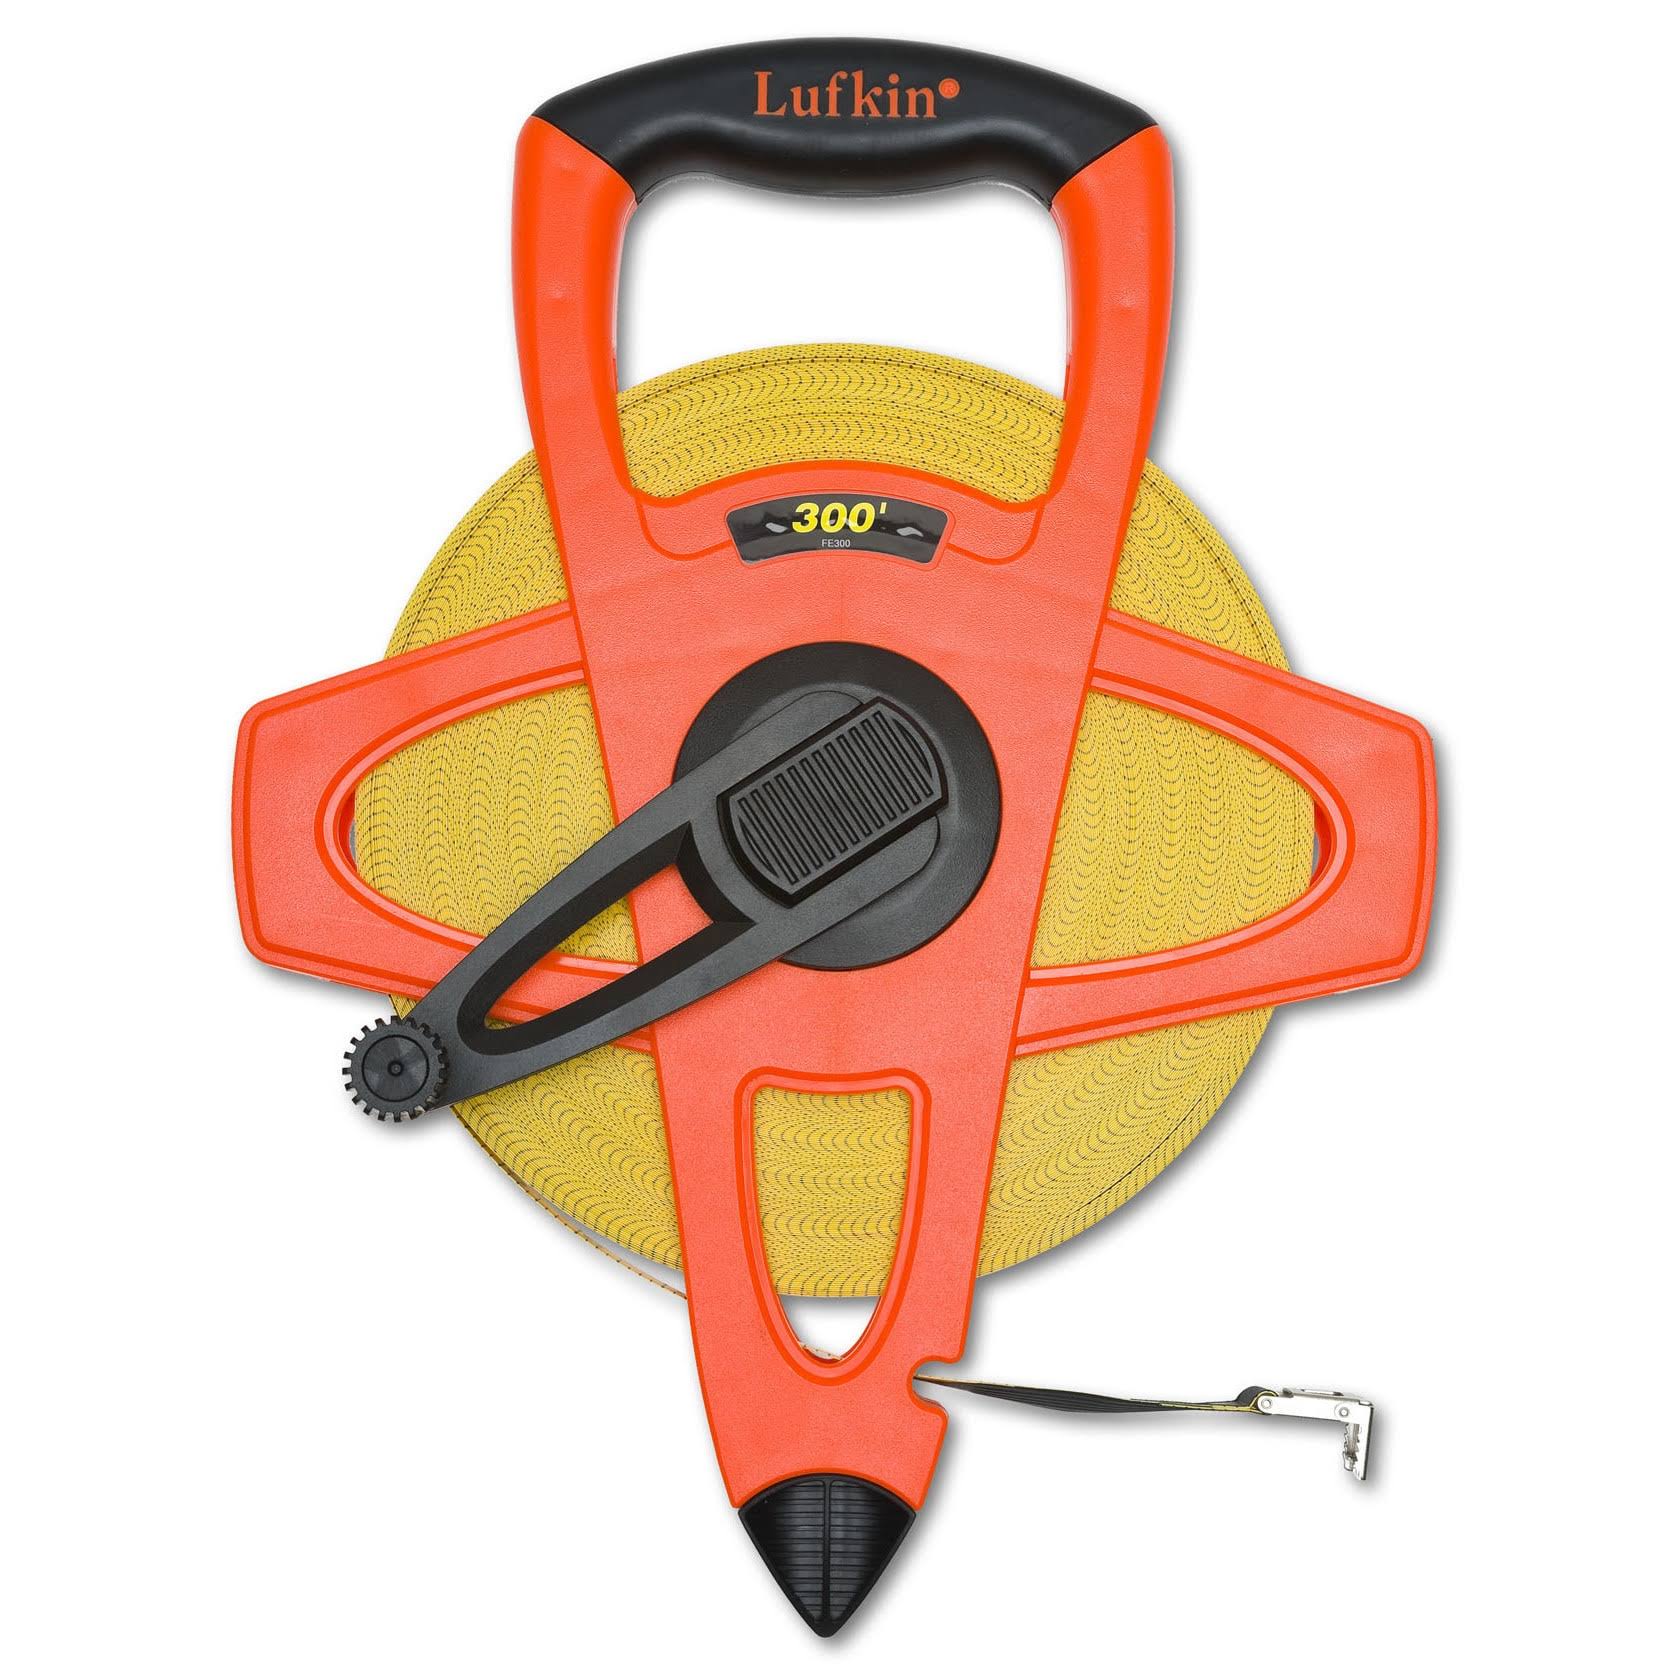 Lufkin Engineer Hi-Viz Fiberglass Measuring Tape - Orange